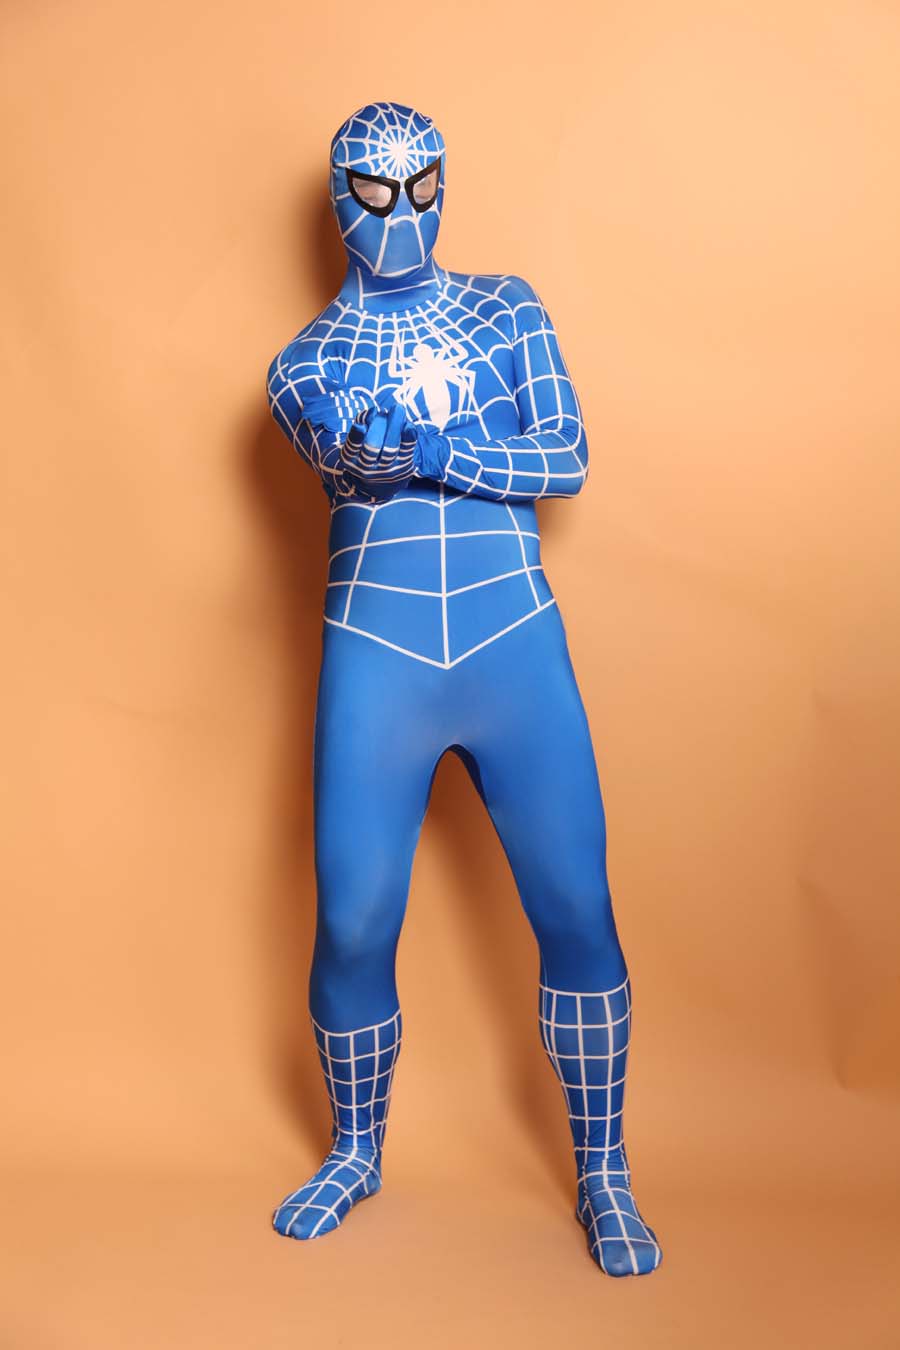 New Printing Blue Spiderman Cosplay Costume